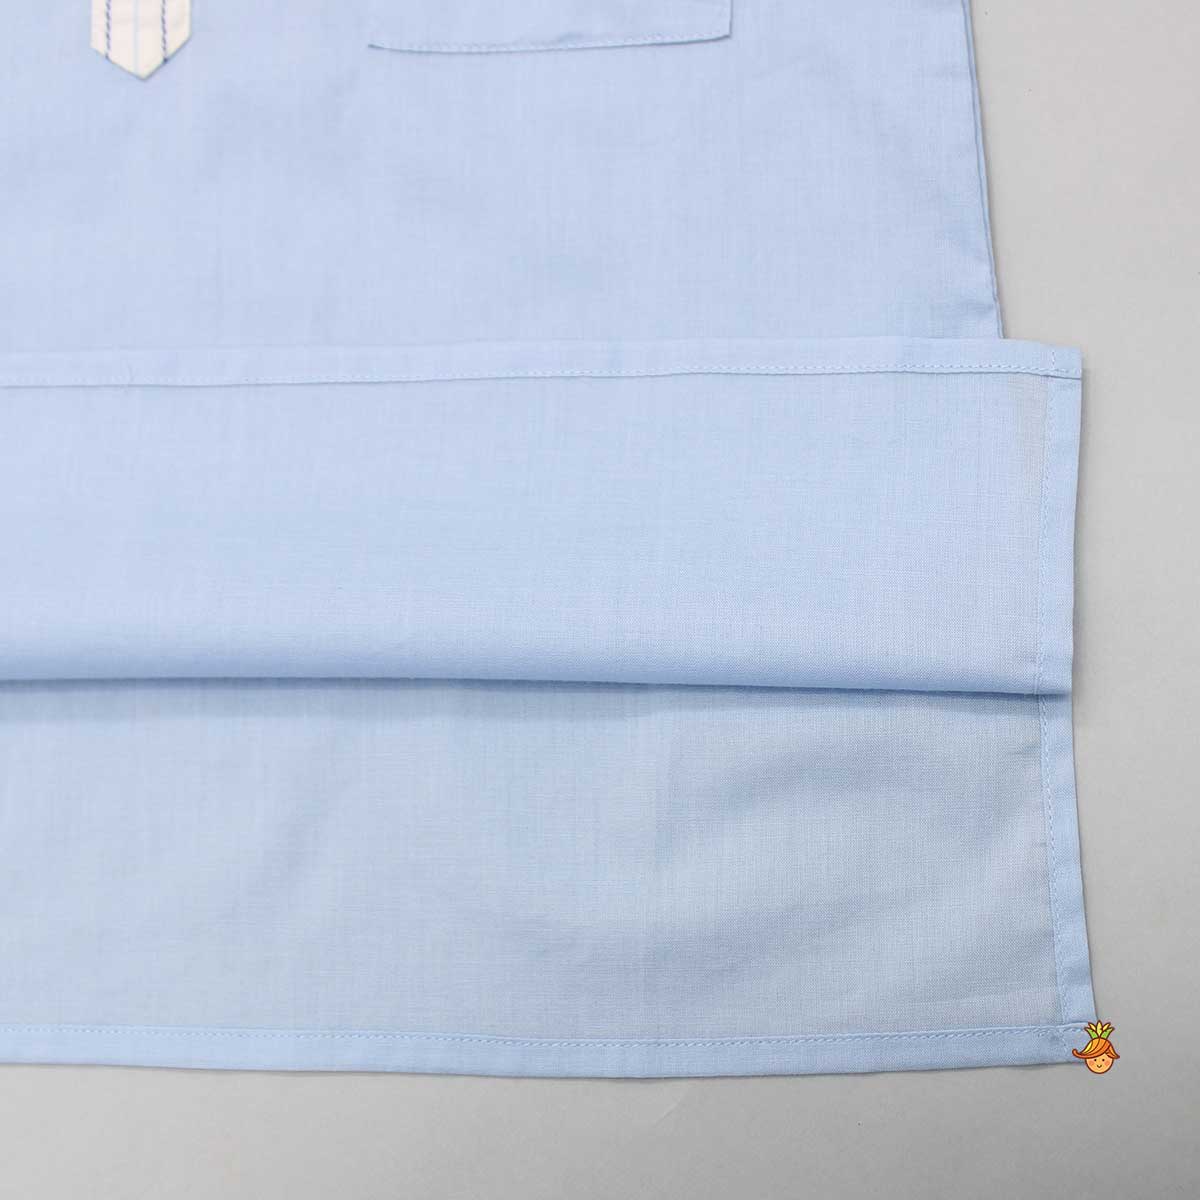 Patch Pocket Detailed Blue Sleepwear